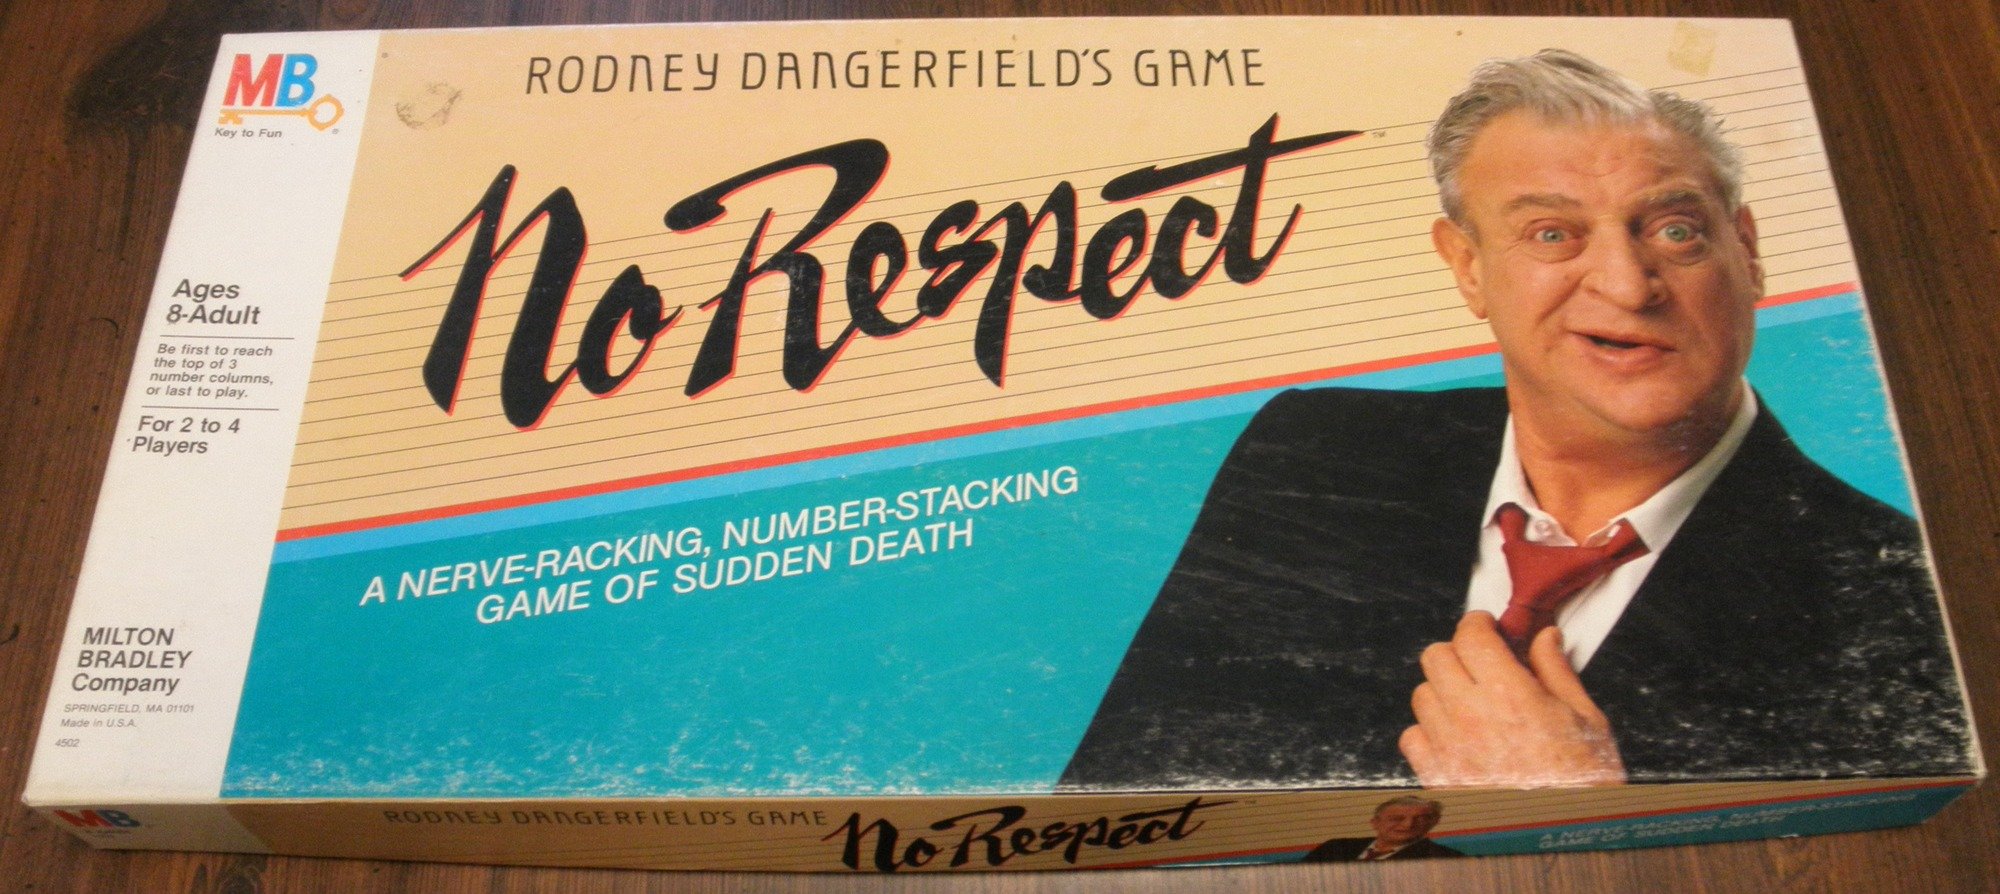 Rodney Dangerfield's Game No Respect Box